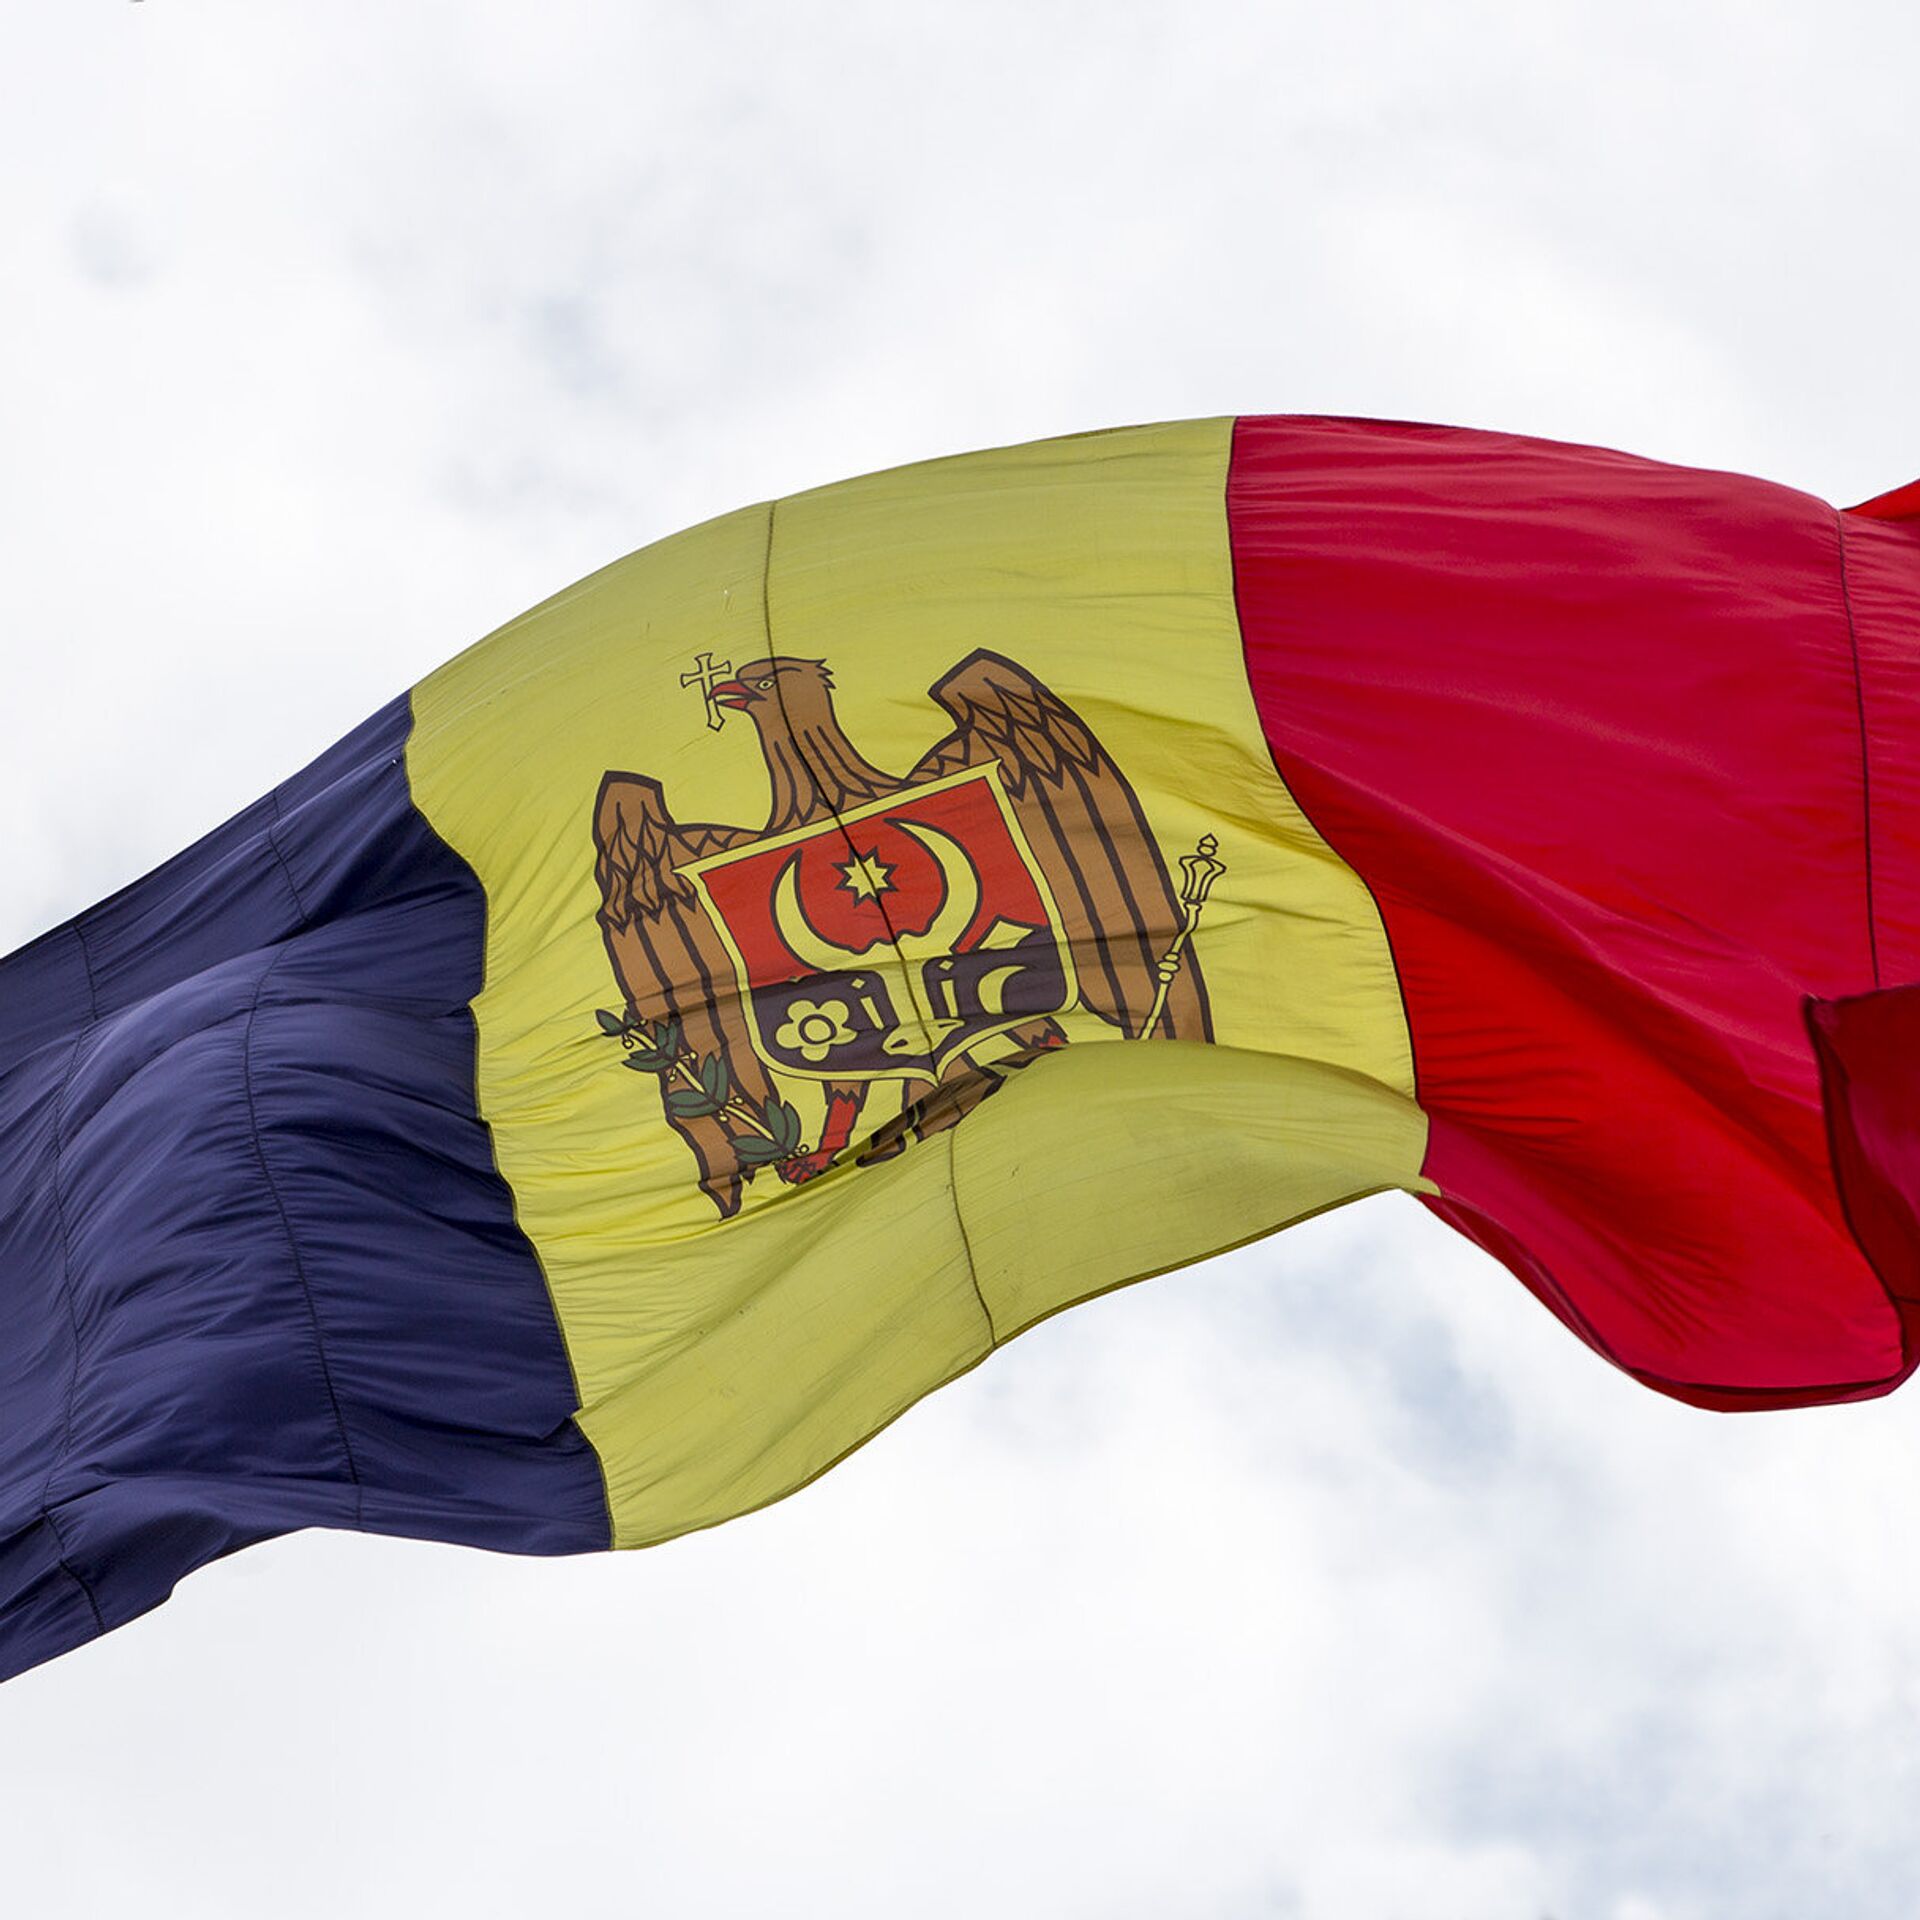 Сделано в молдове. Беларусь Молдова флаги. Франция и Молдова флаги. Флаг Молдовы фото. Красный флаг Молдавии.